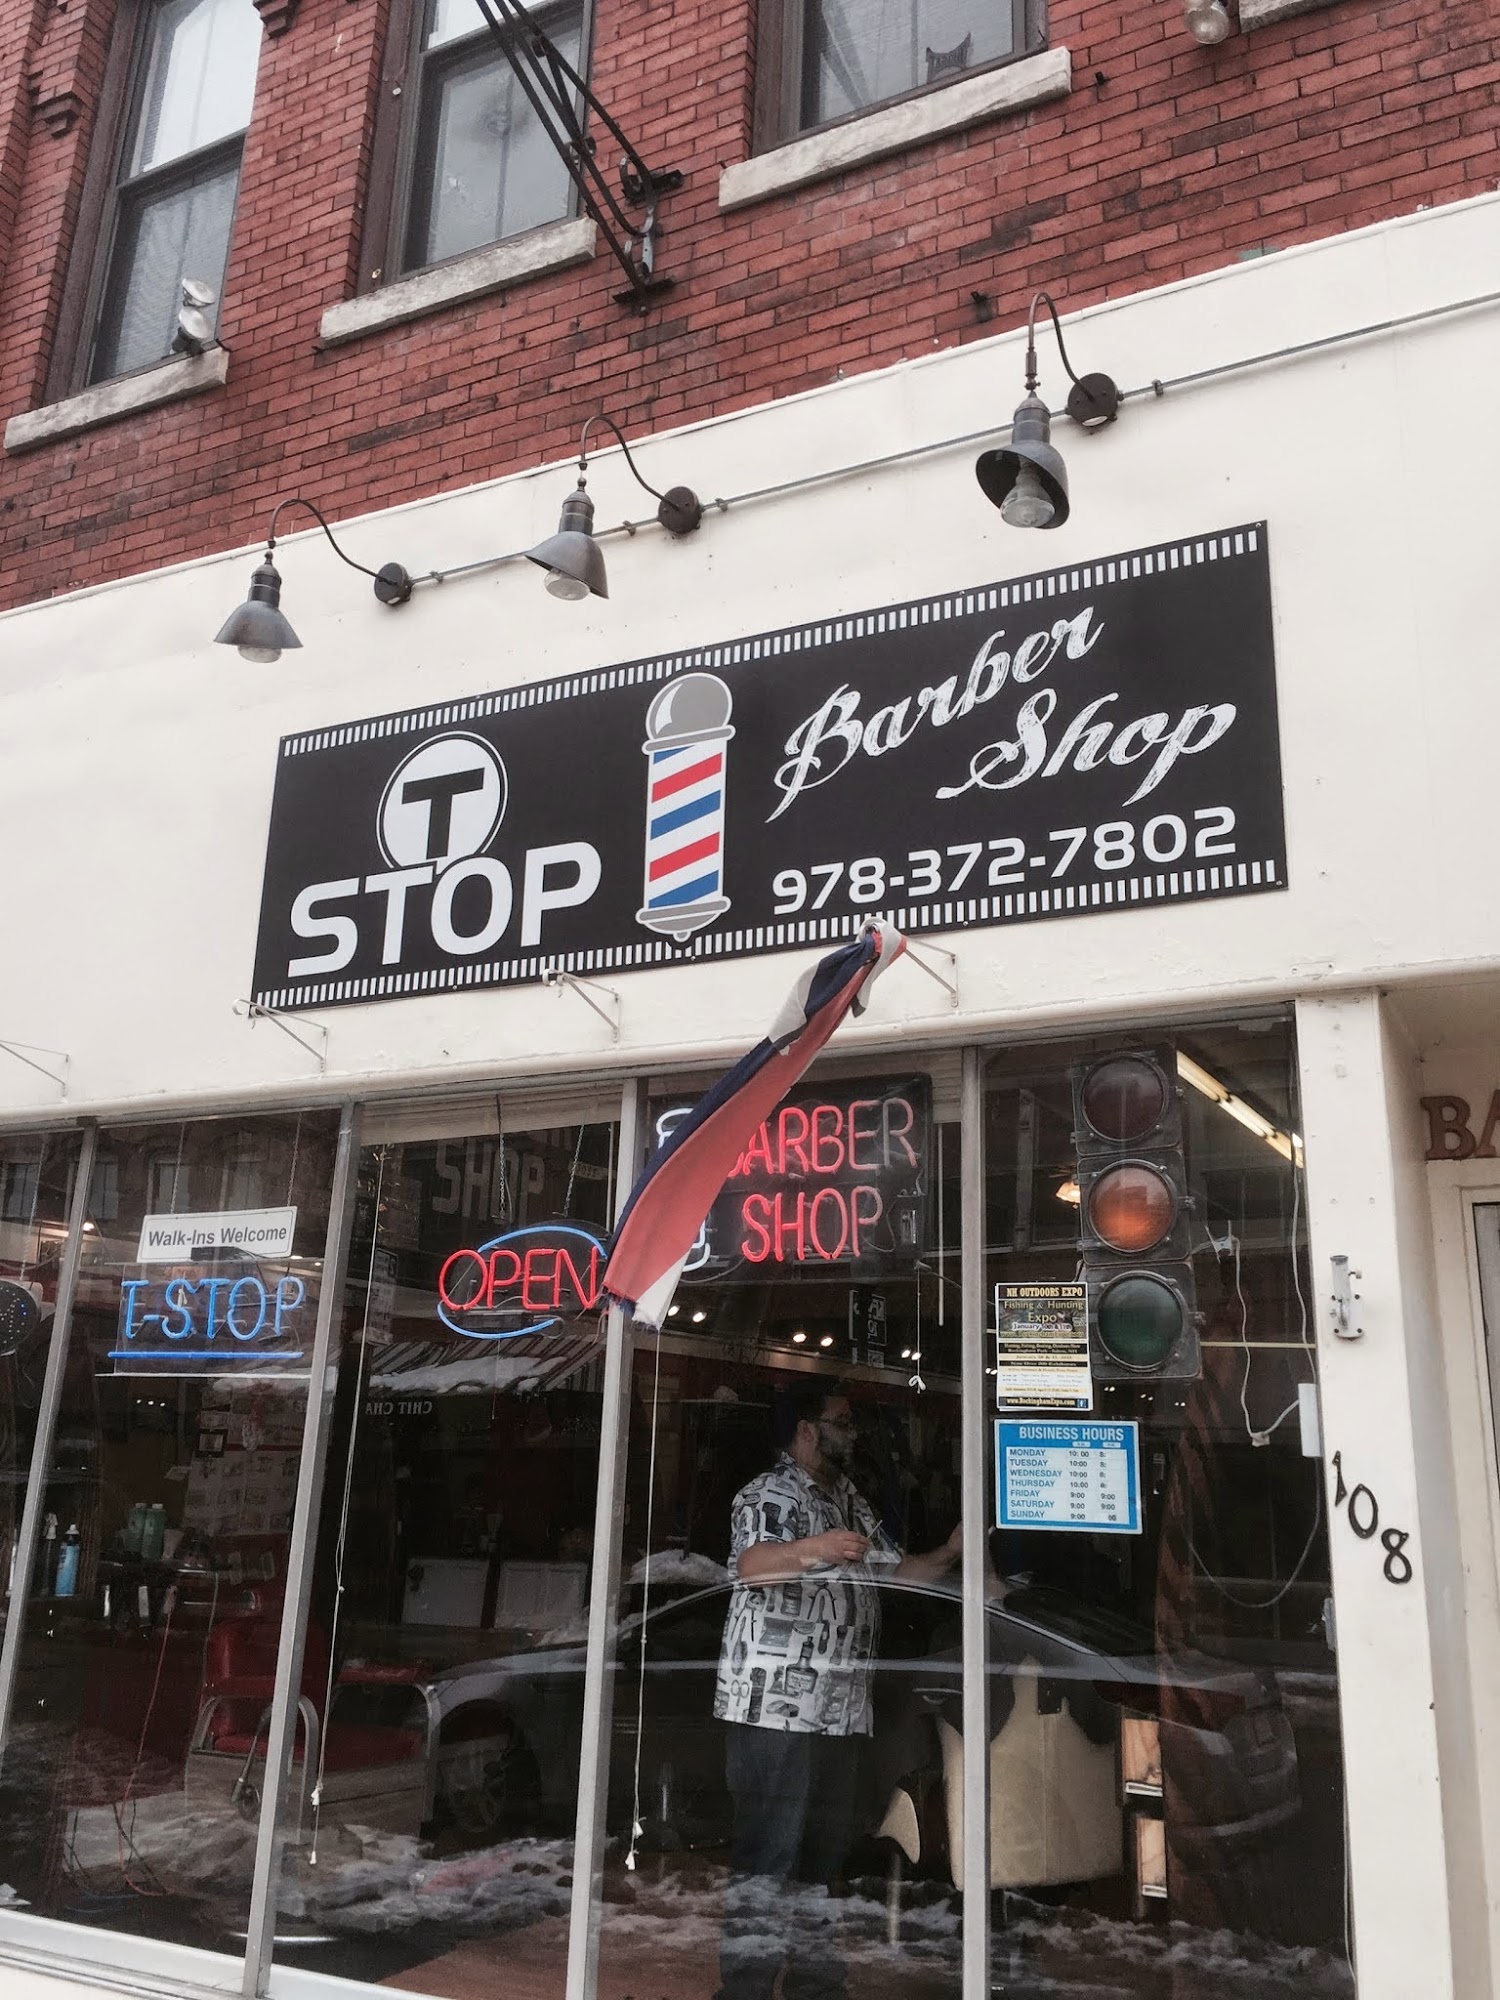 T-Stop Barbershop